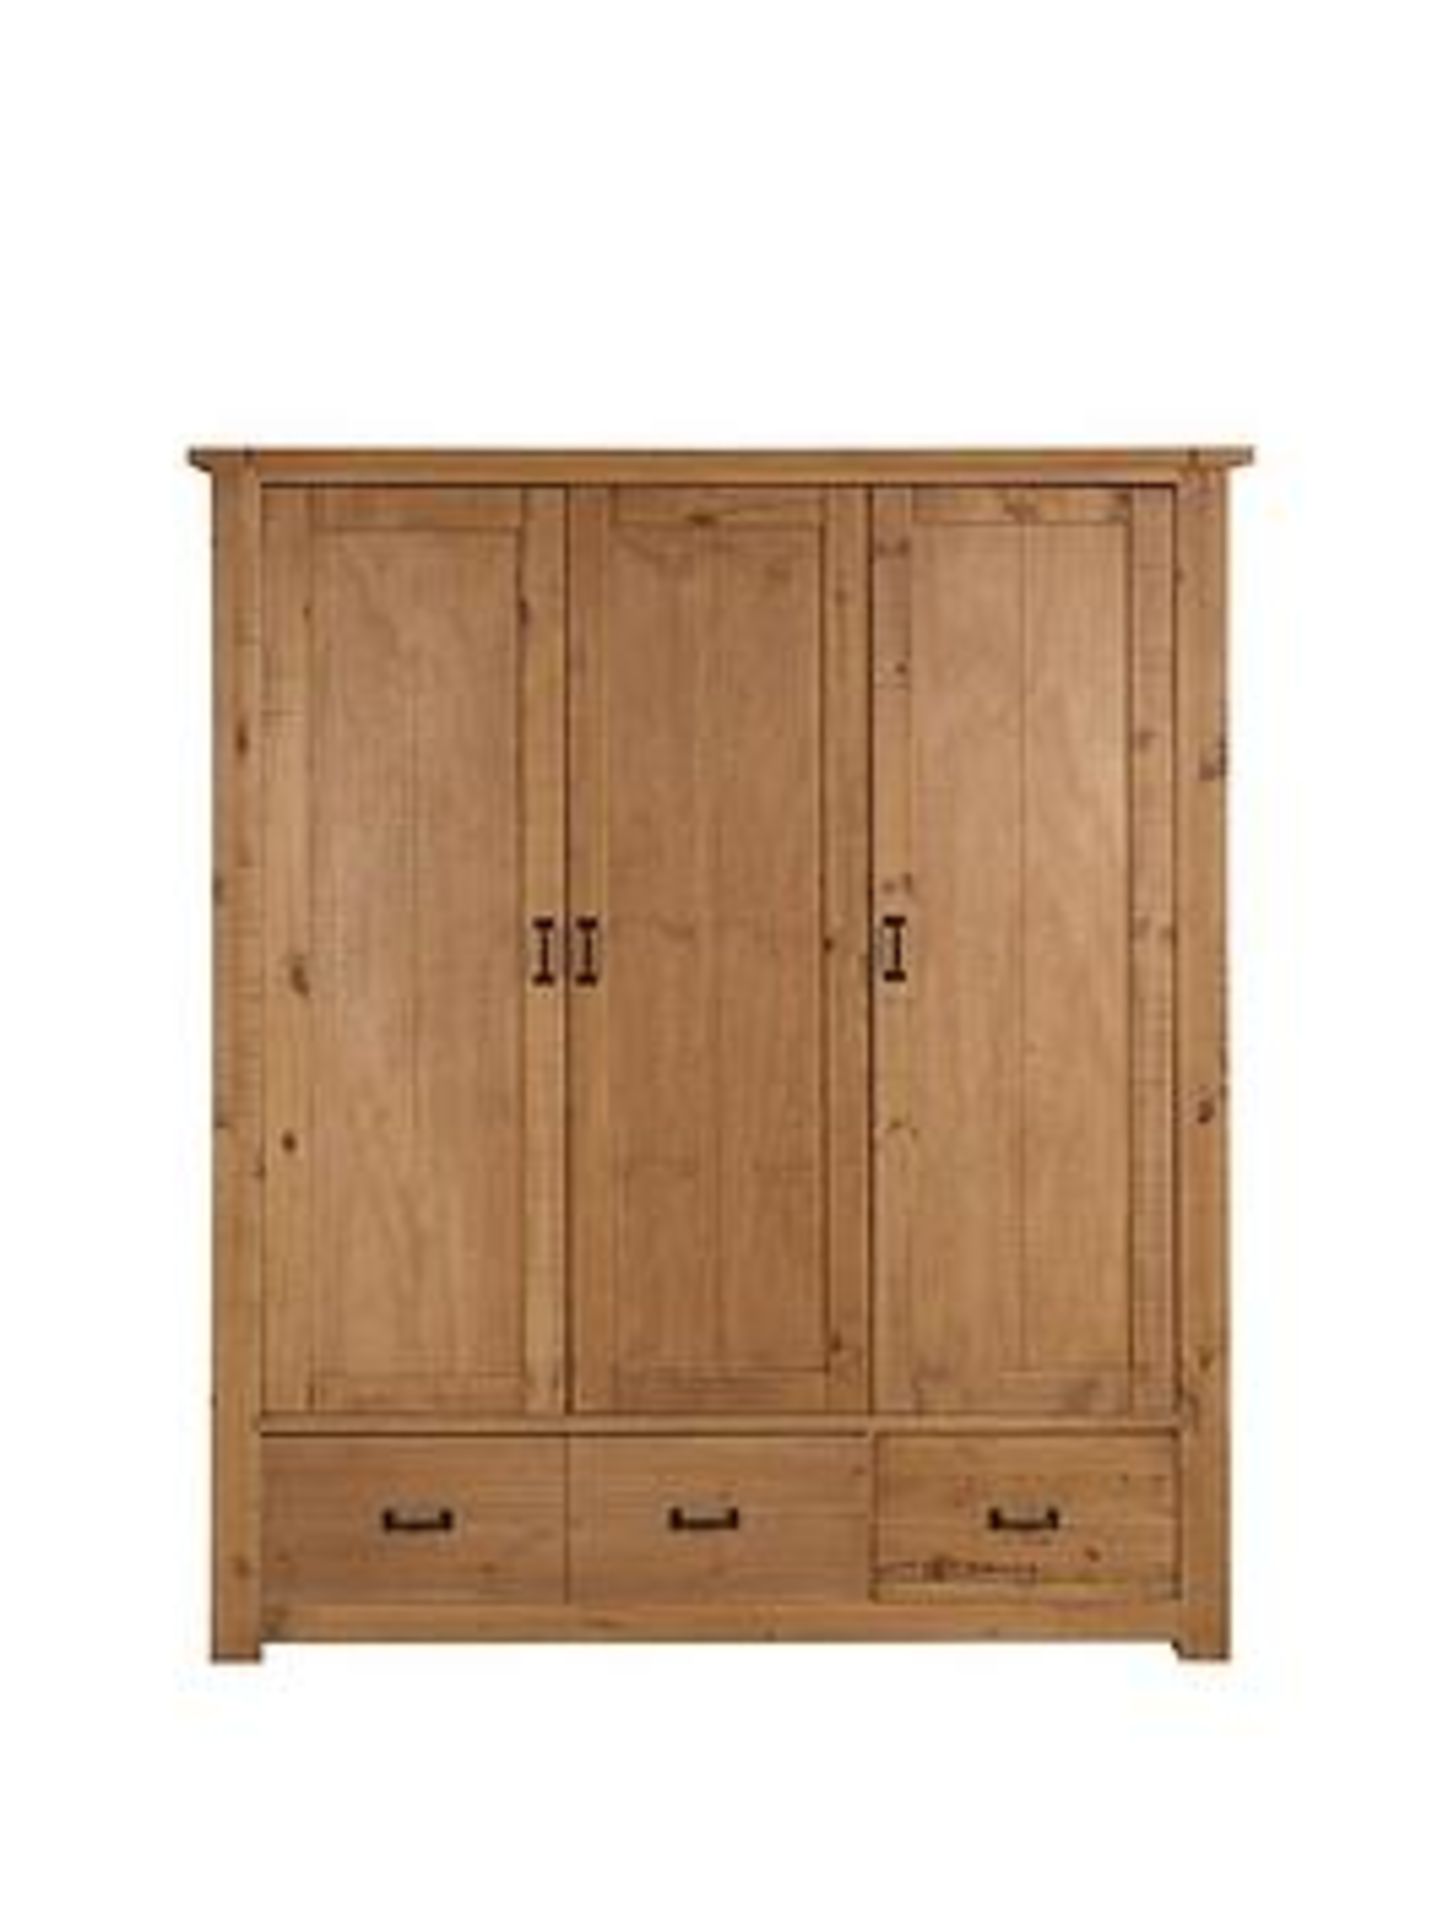 Boxed Item Albion 3 Doors 3 Drawers Wardrobe [Pine] 185X157X56Cm Rrp:£682.0 - Image 2 of 2